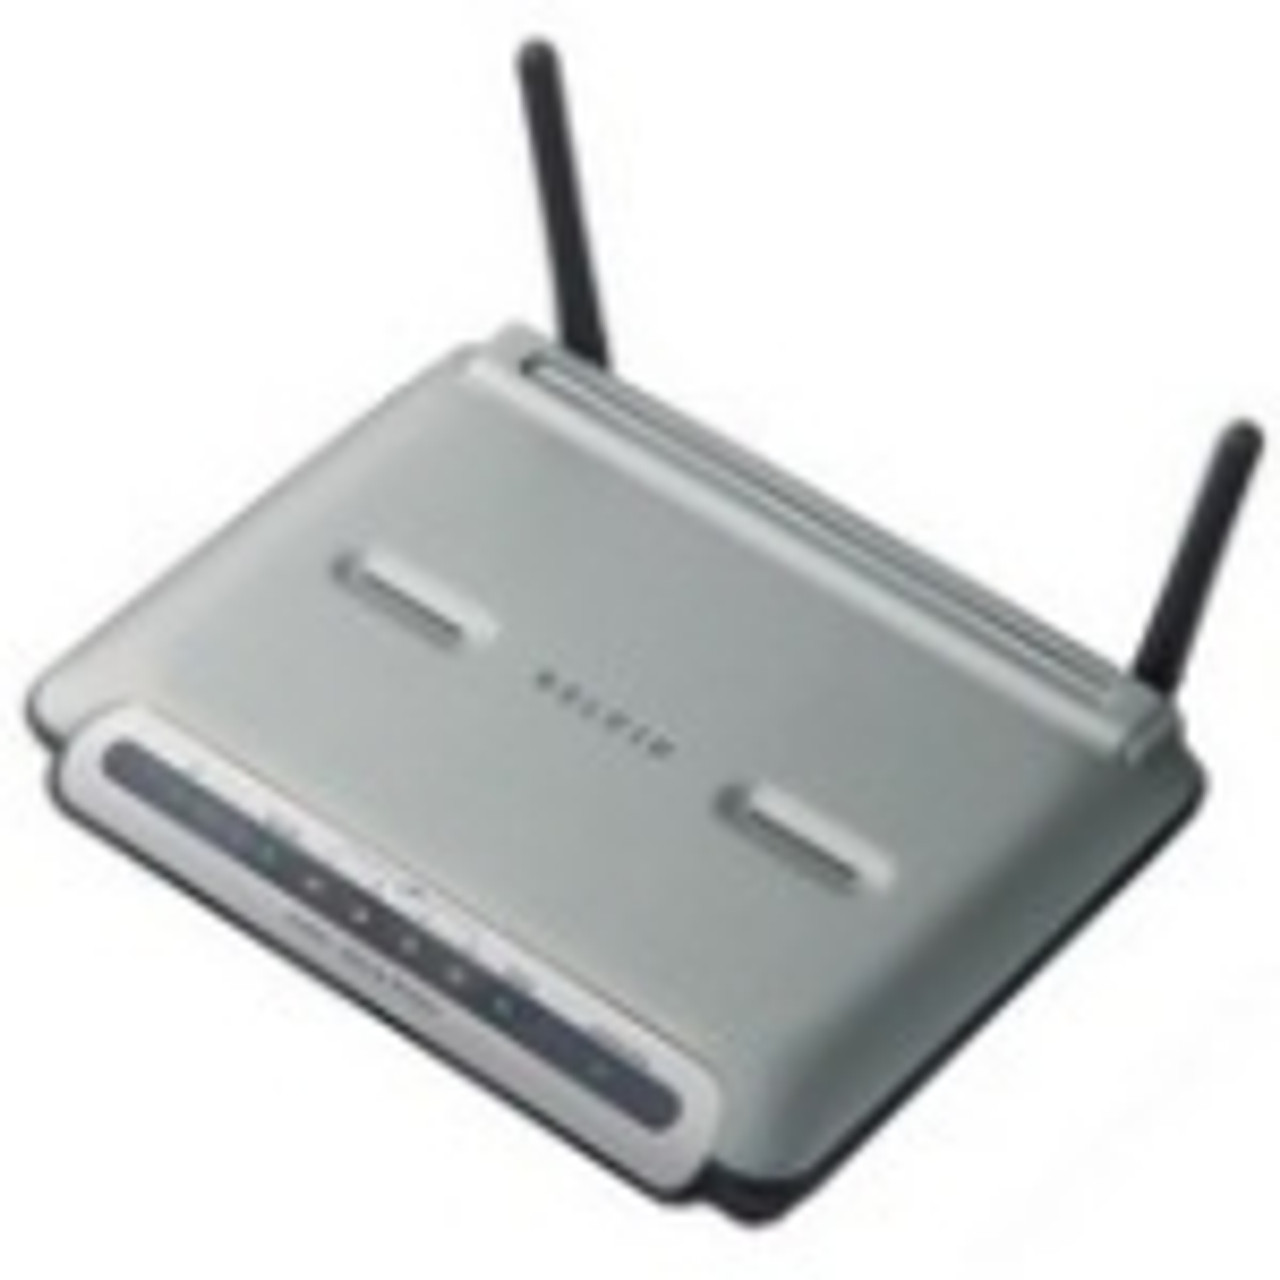 PTR11499 Belkin Wireless G+ Router 4 x 10/100Base-TX LAN, 1 x 10/100Base-TX WAN IEEE 802.11b/g 54Mbps (Refurbished)